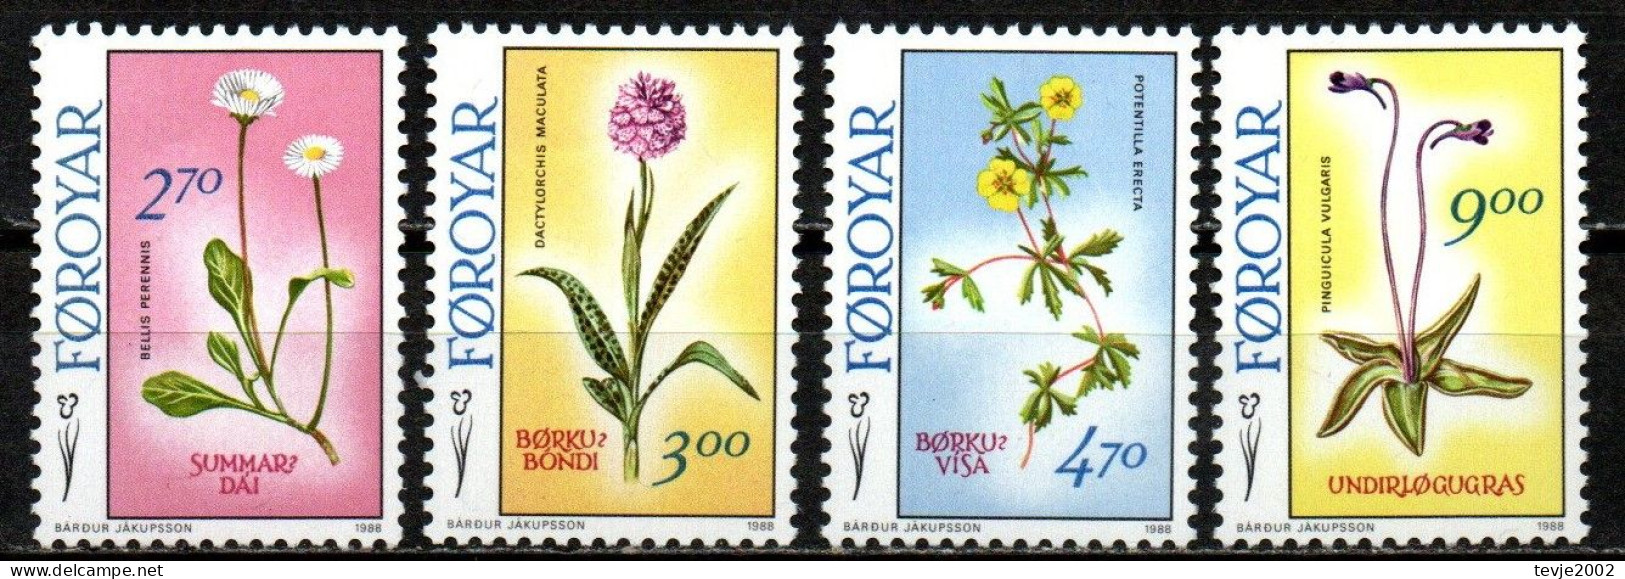 Färöer 1988 - Mi.Nr. 162 - 165 - Postfrisch MNH - Blumen Flowers - Autres & Non Classés